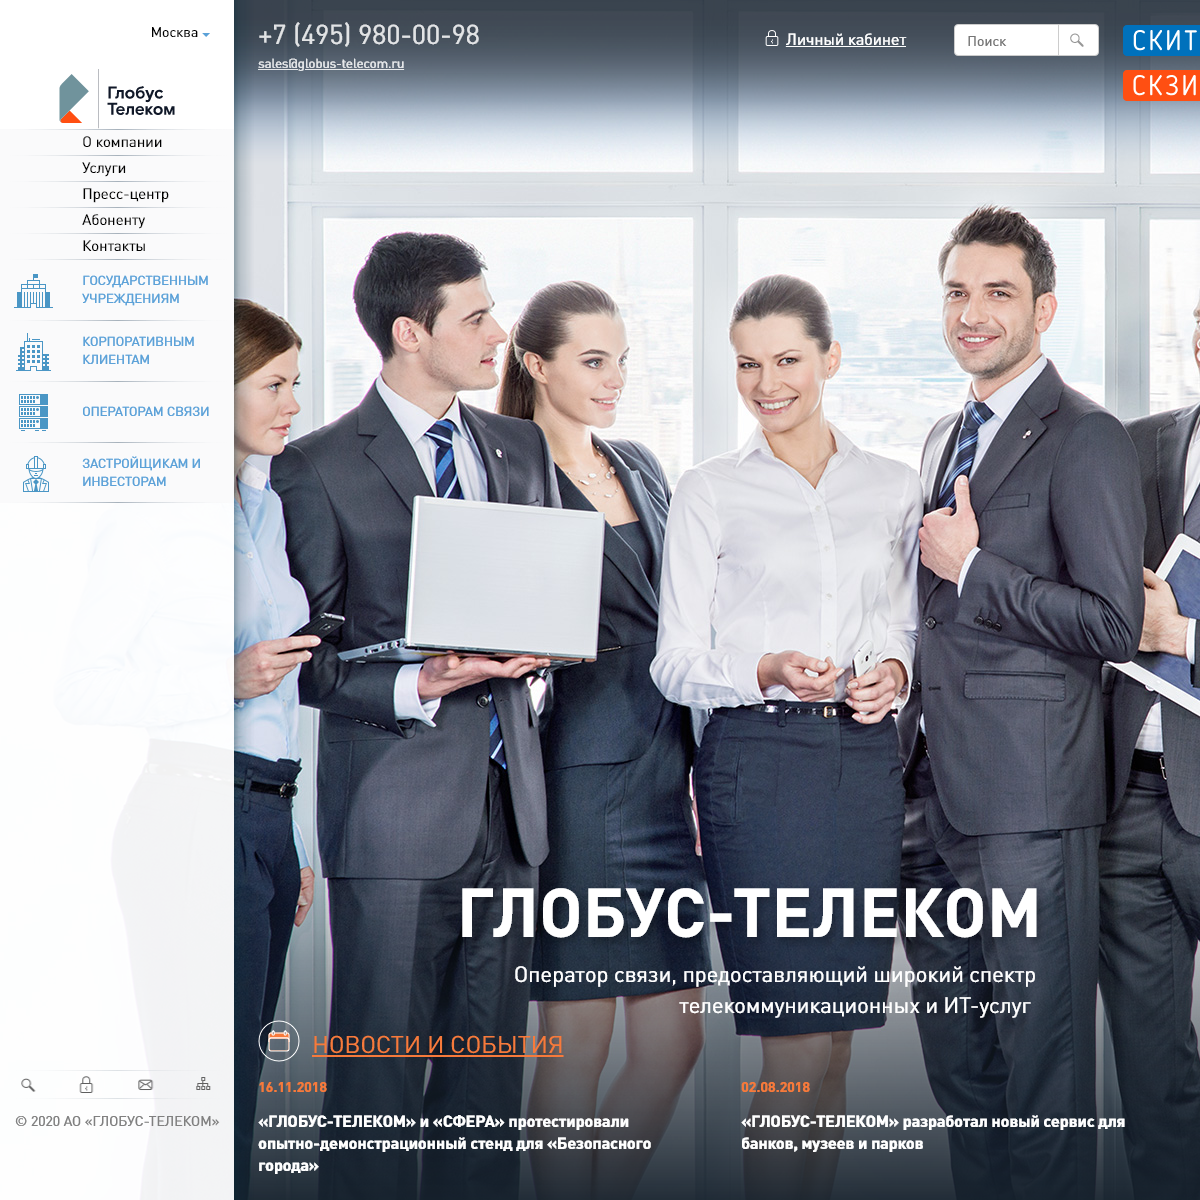 A complete backup of globus-telecom.ru